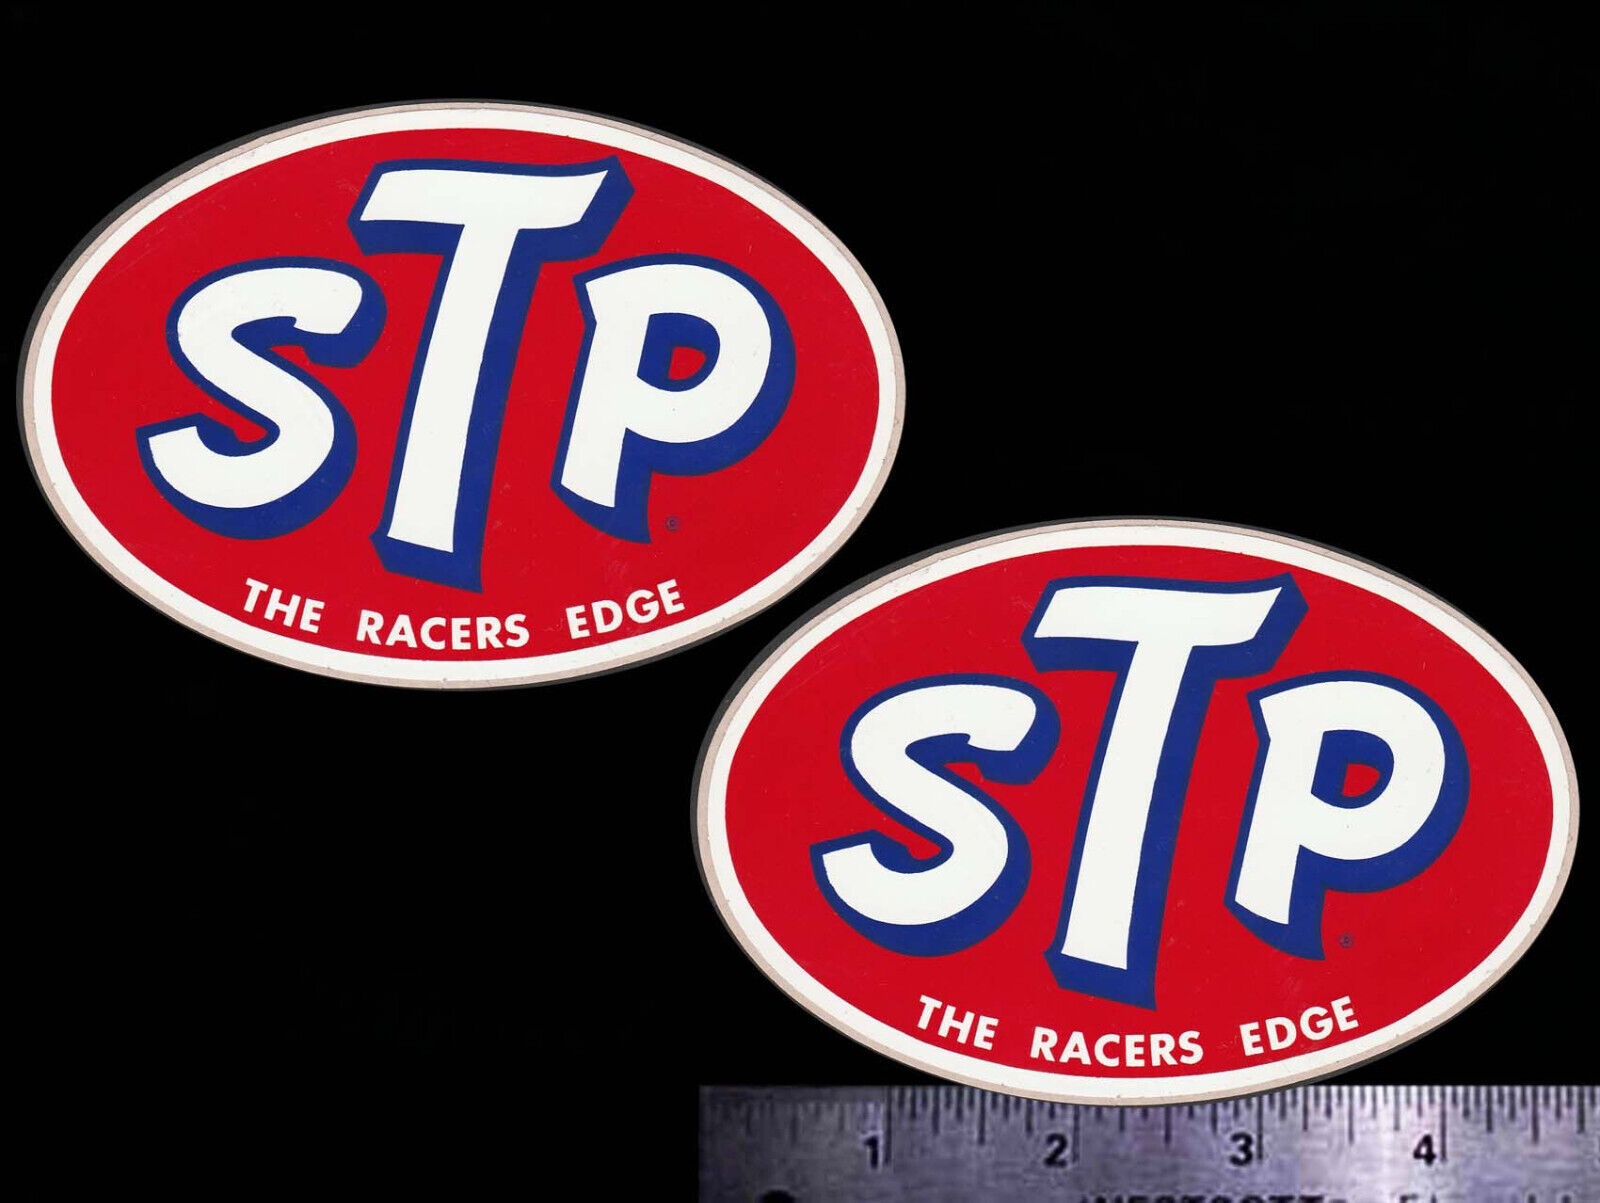 STP Racers Edge - Set of 2 Original Vintage Racing Decals/Stickers Richard Petty